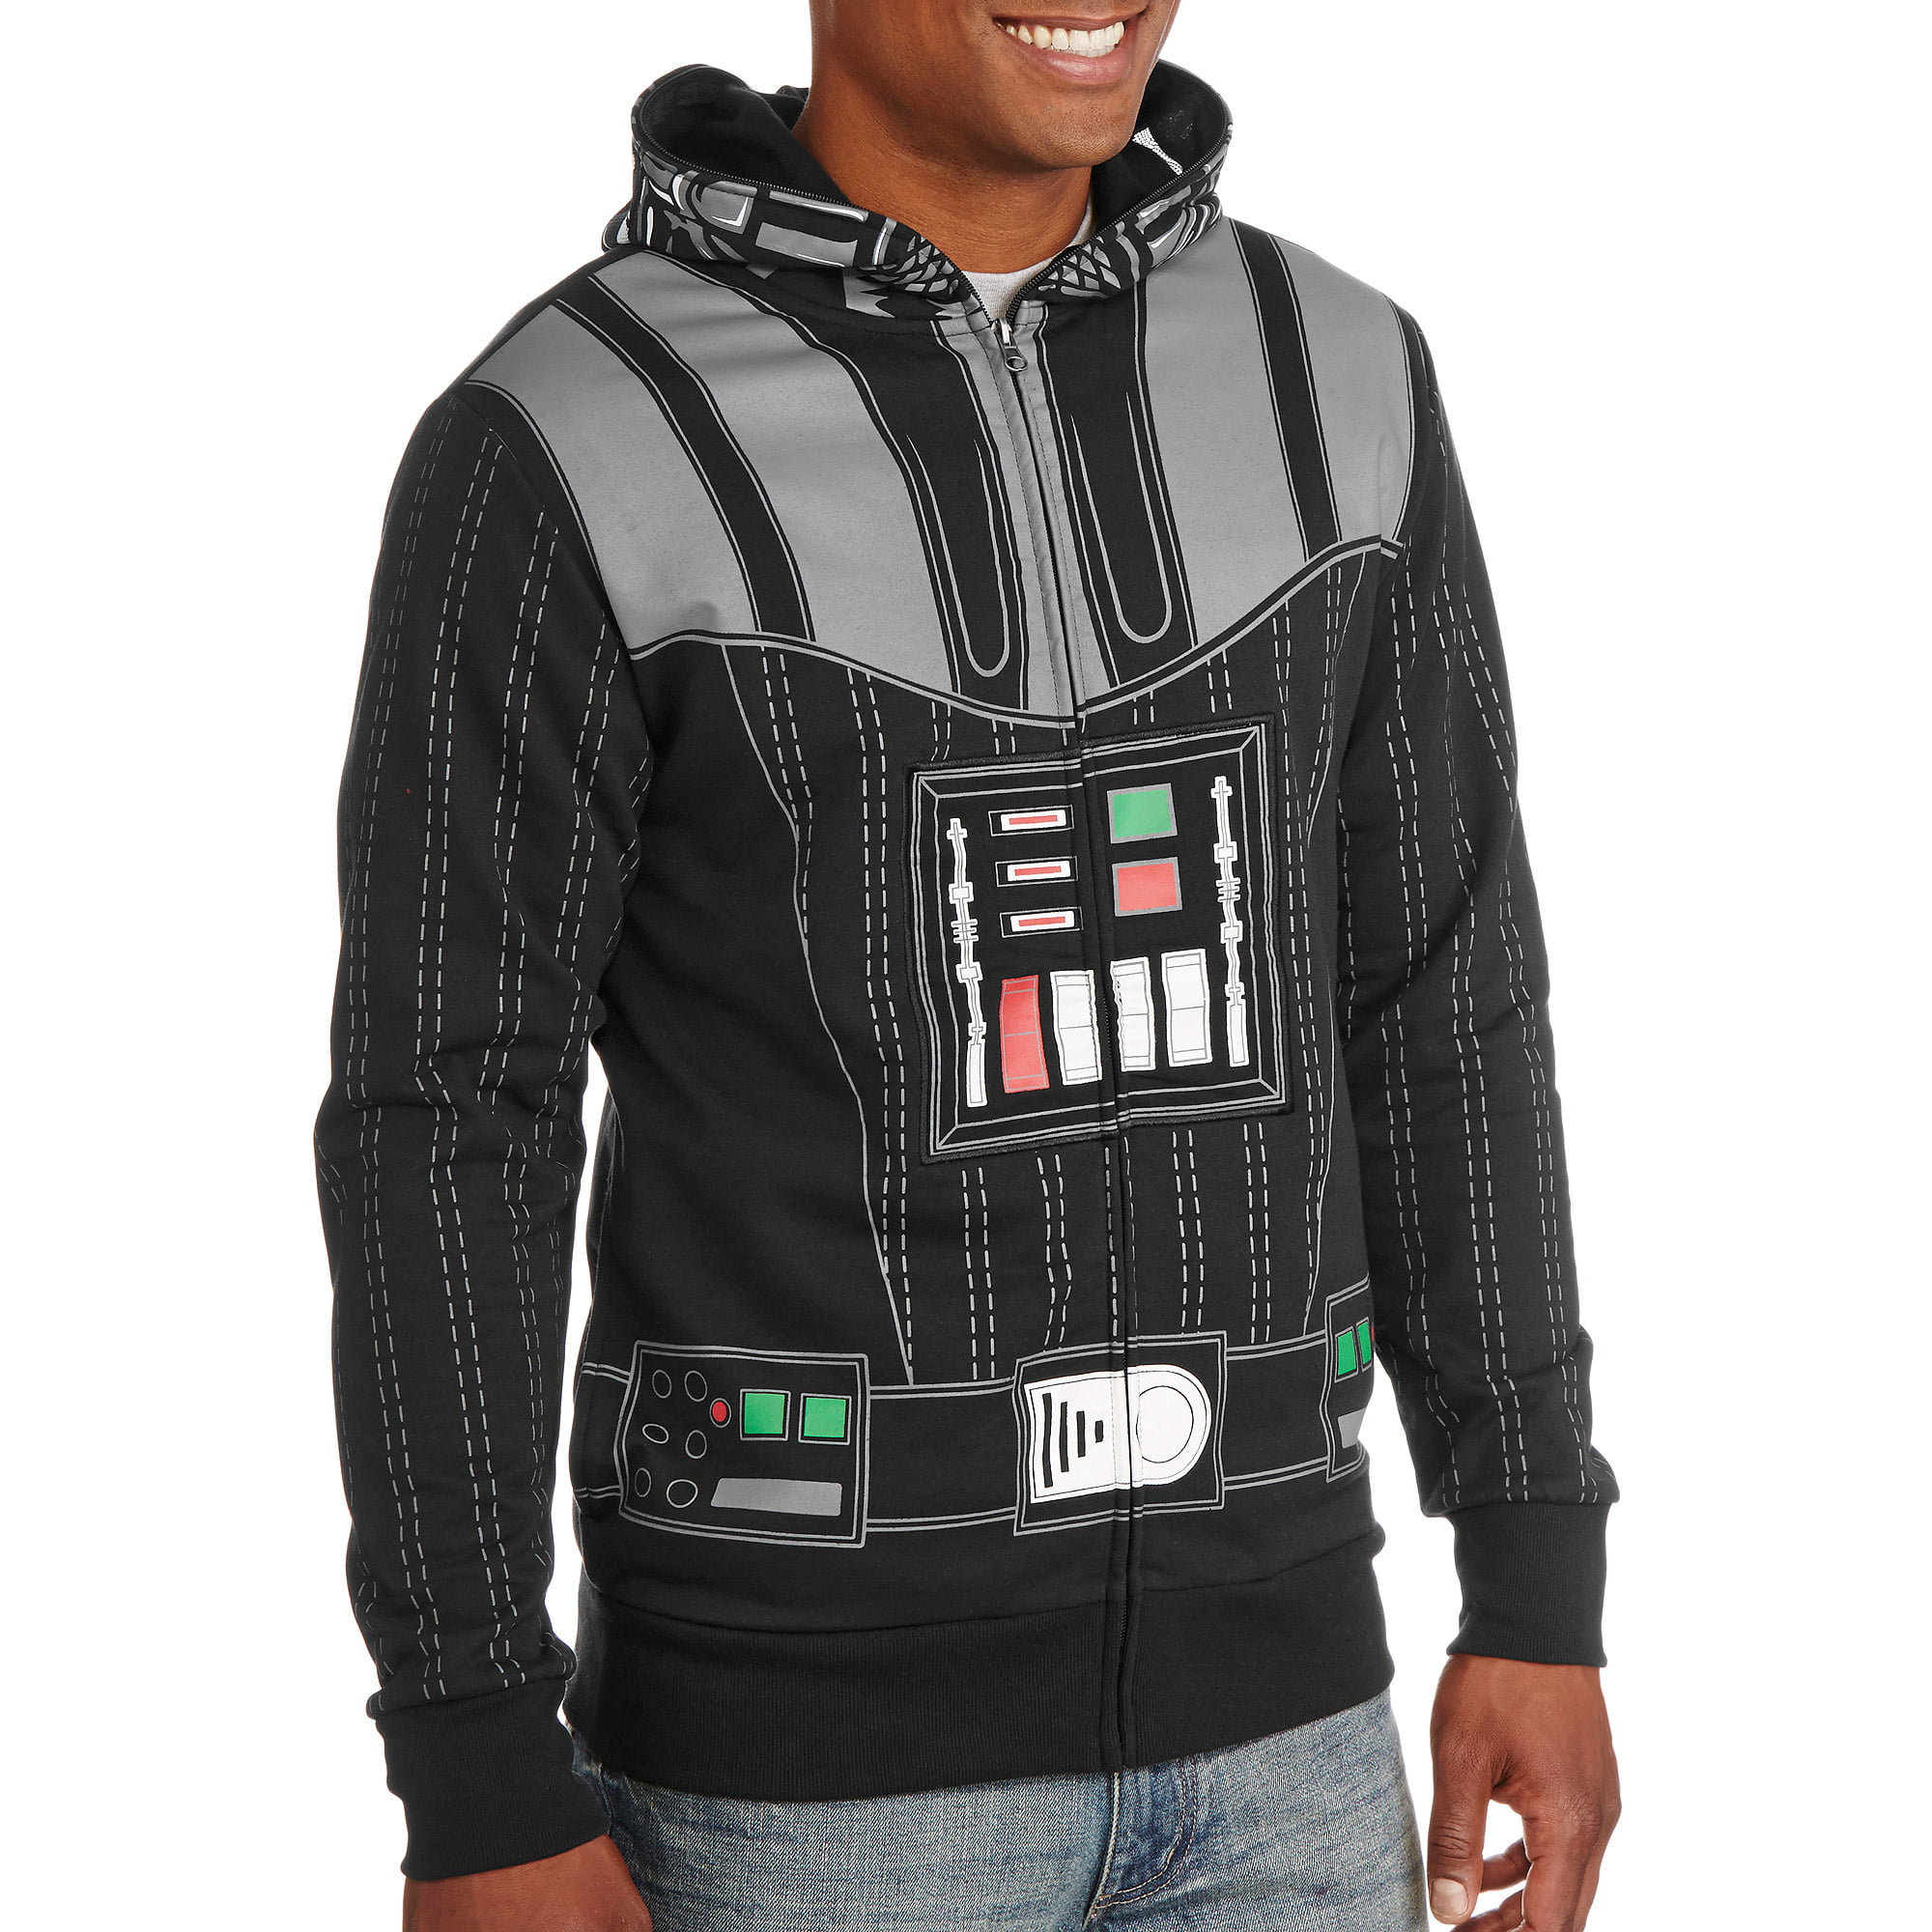 Star Wars Darth Vader Hoodie Zipper Coat Mens Jacket Winter Jacket Sweatshirts